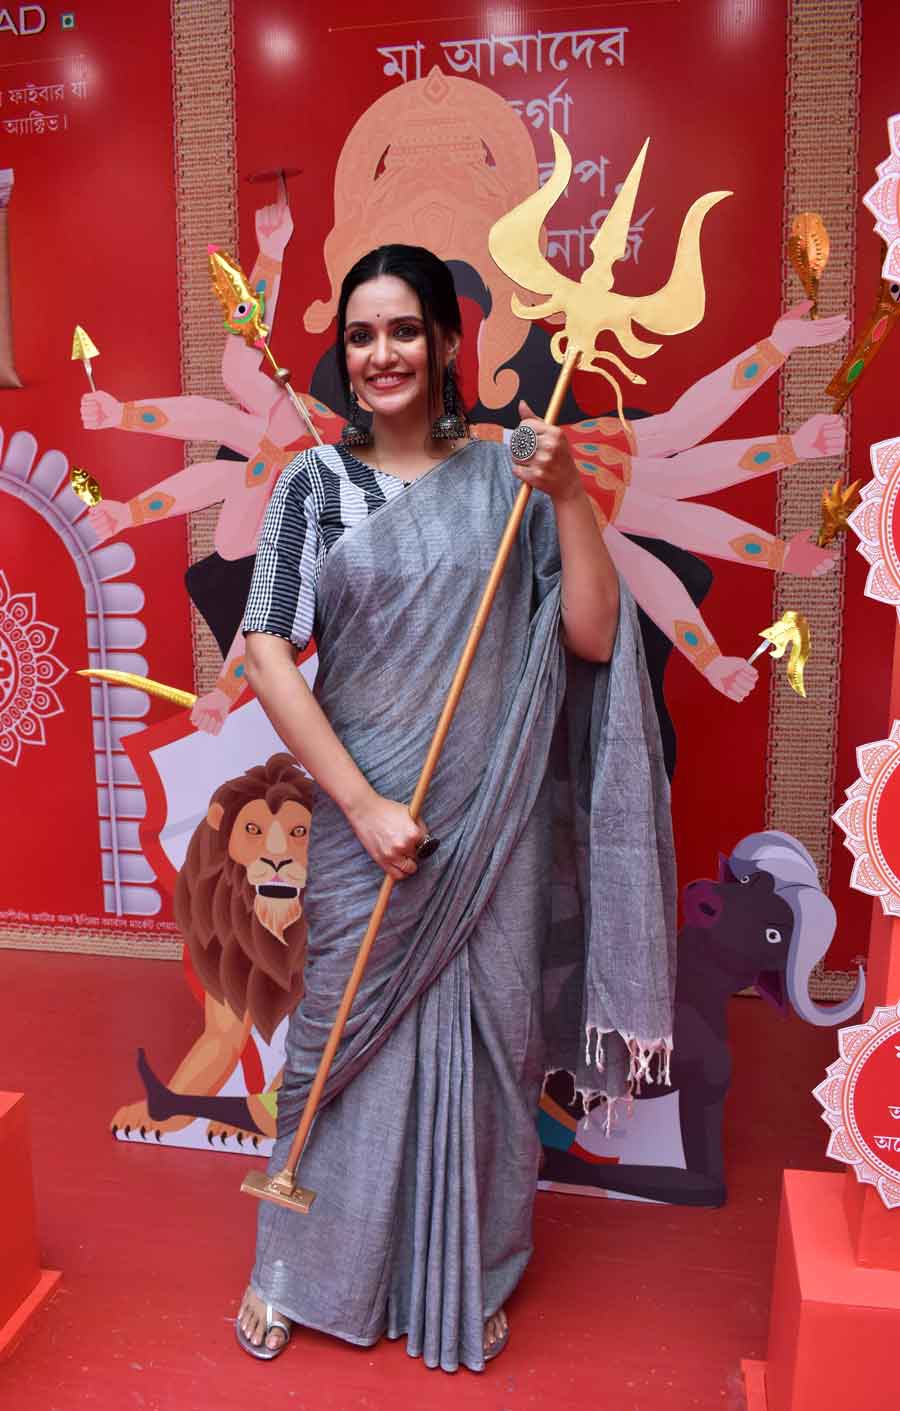 Actress Priyanka Sarkar at Bagbazar Sarbojonin Puja pandal on Wednesday